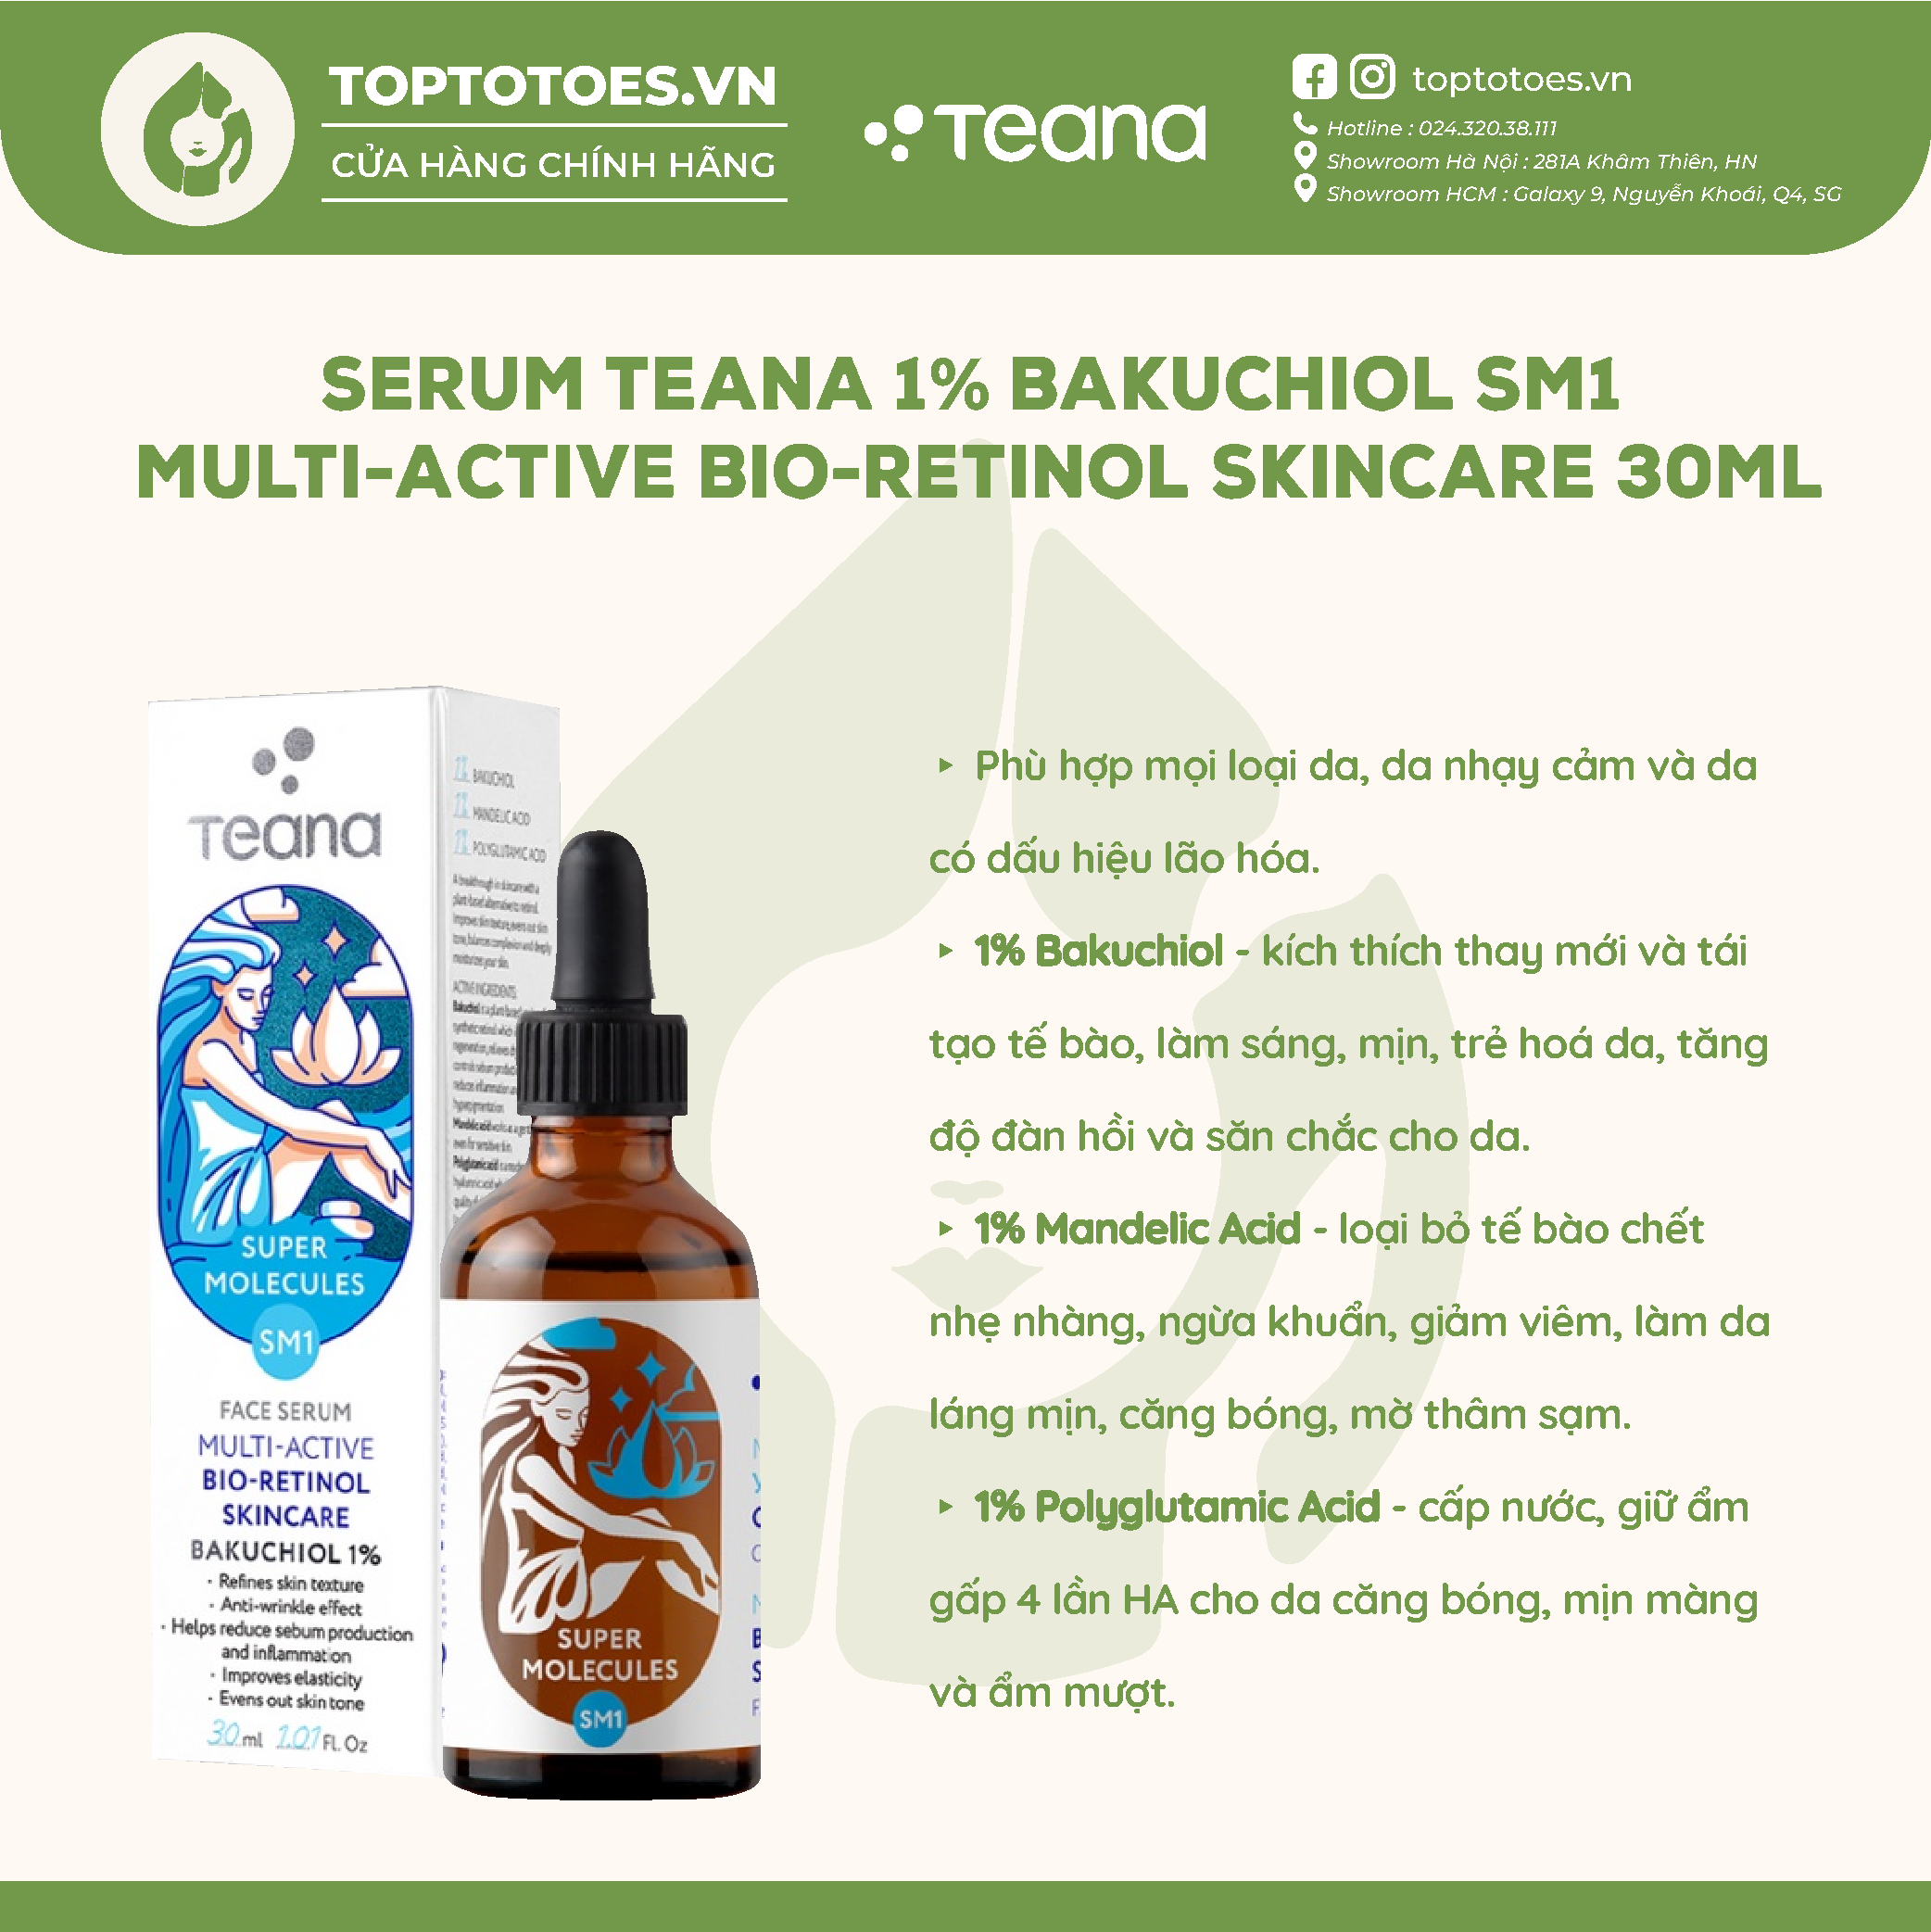 Serum Teana 1% Bakuchiol SM1 Super Molecules Multi-Active Bio